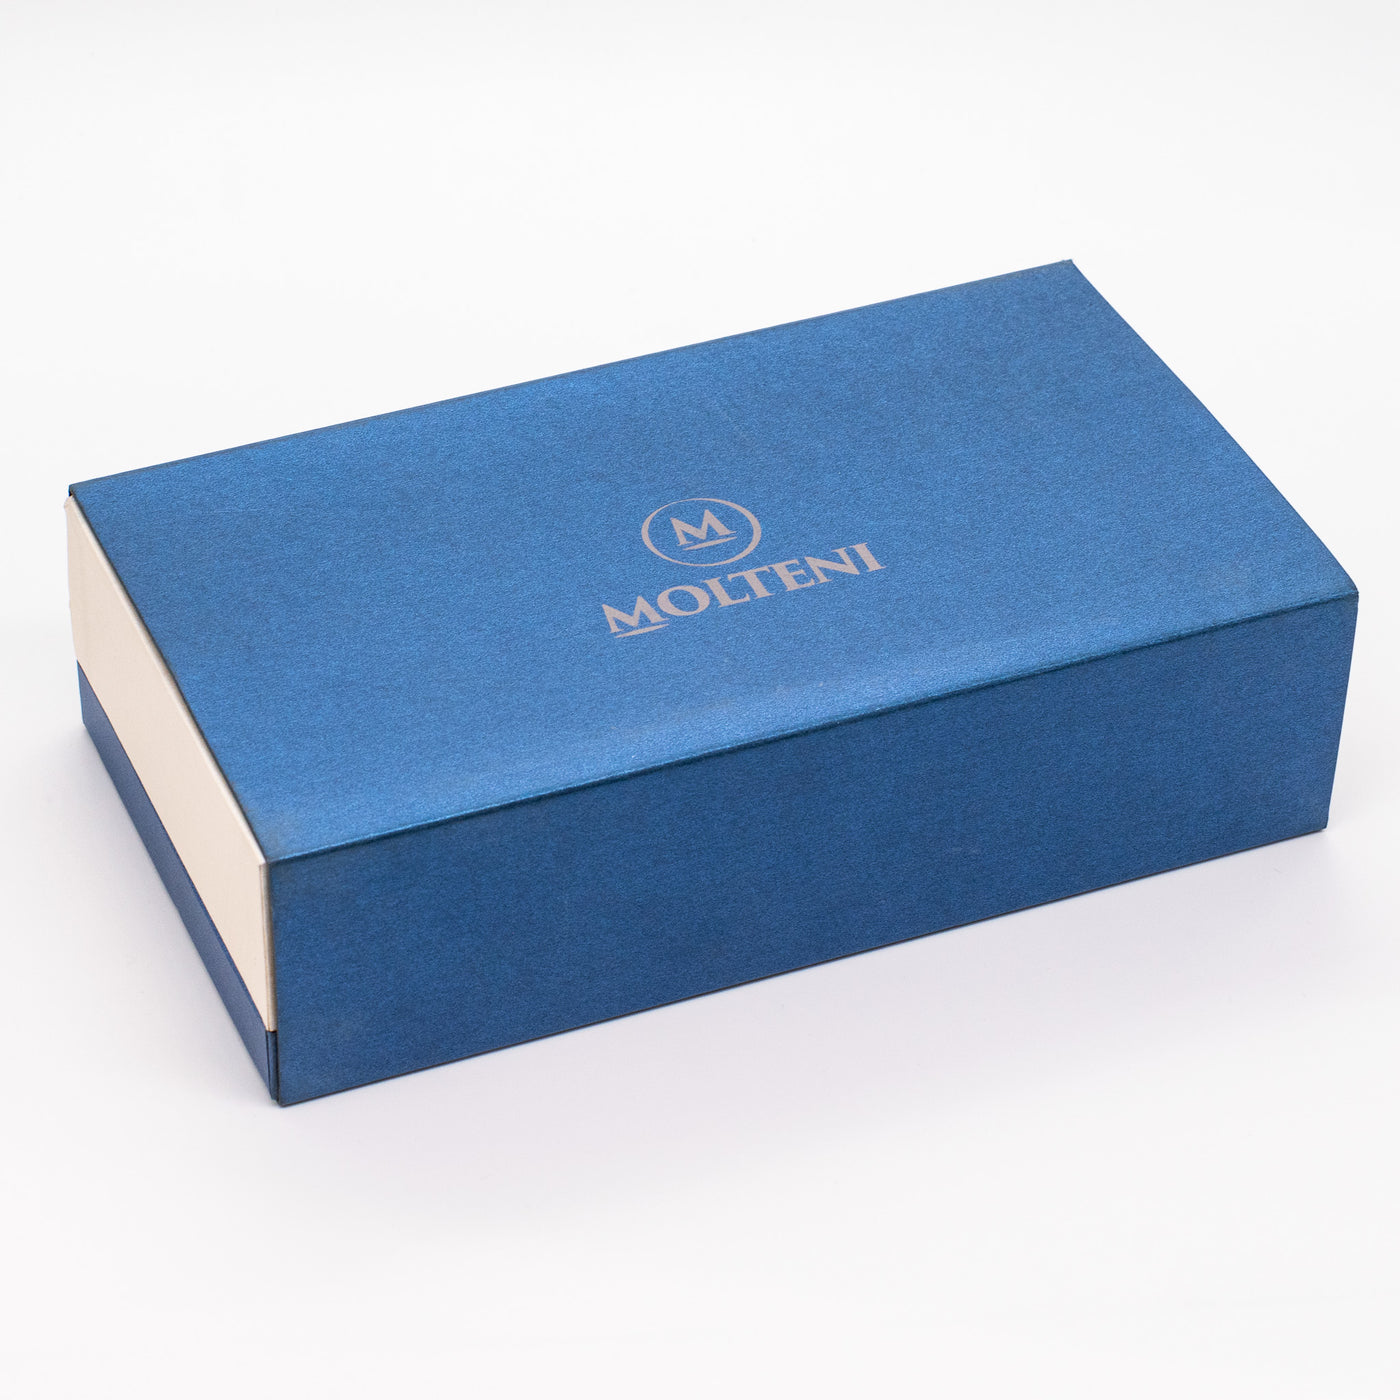 Molteni Modelo 55 Fountain Pen - Royal Blue Lucens Celluloid packaging